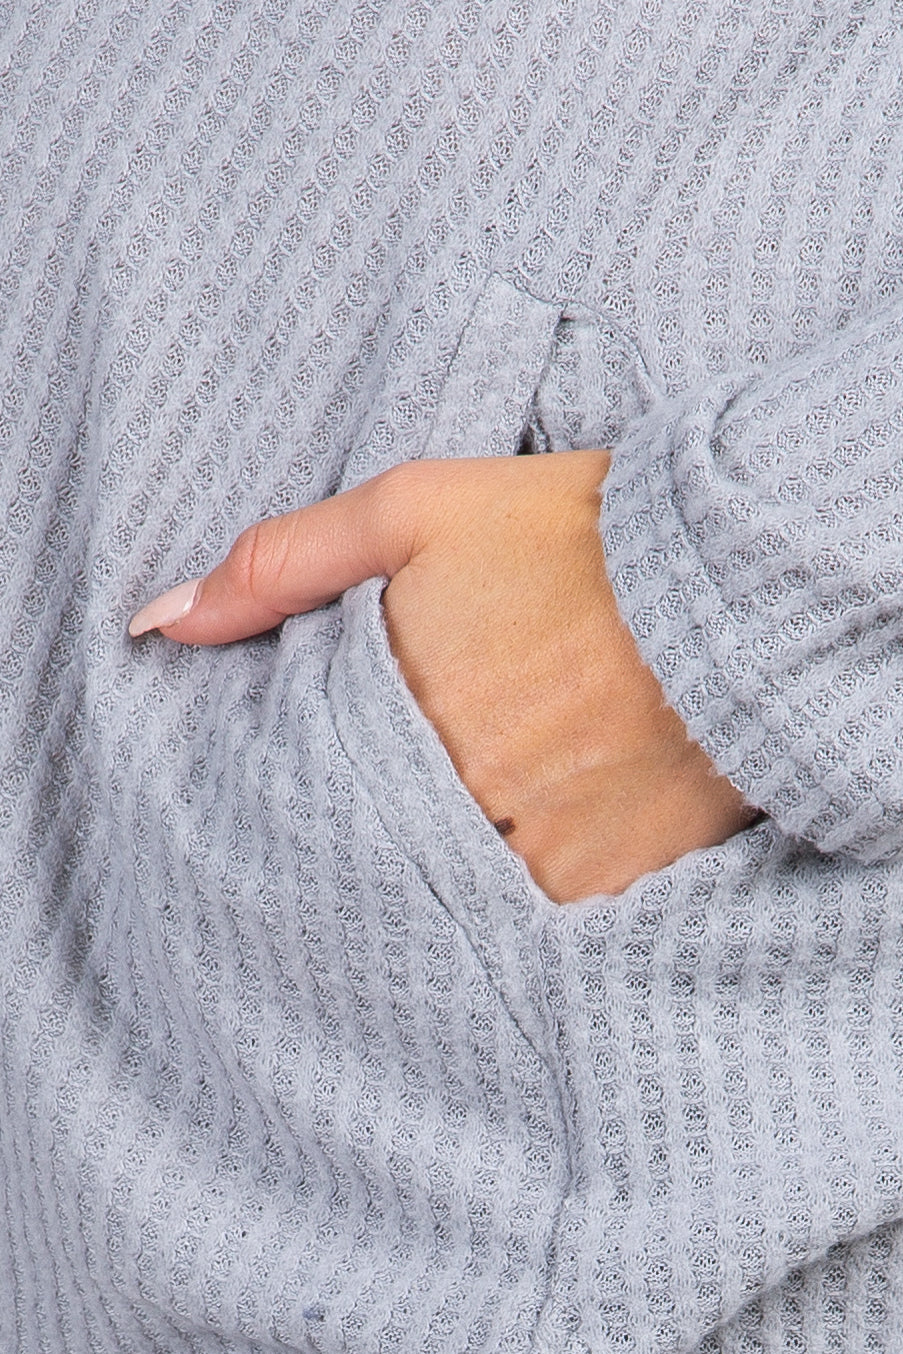 Silver Grey Half Zipper Knit Maternity Sweater